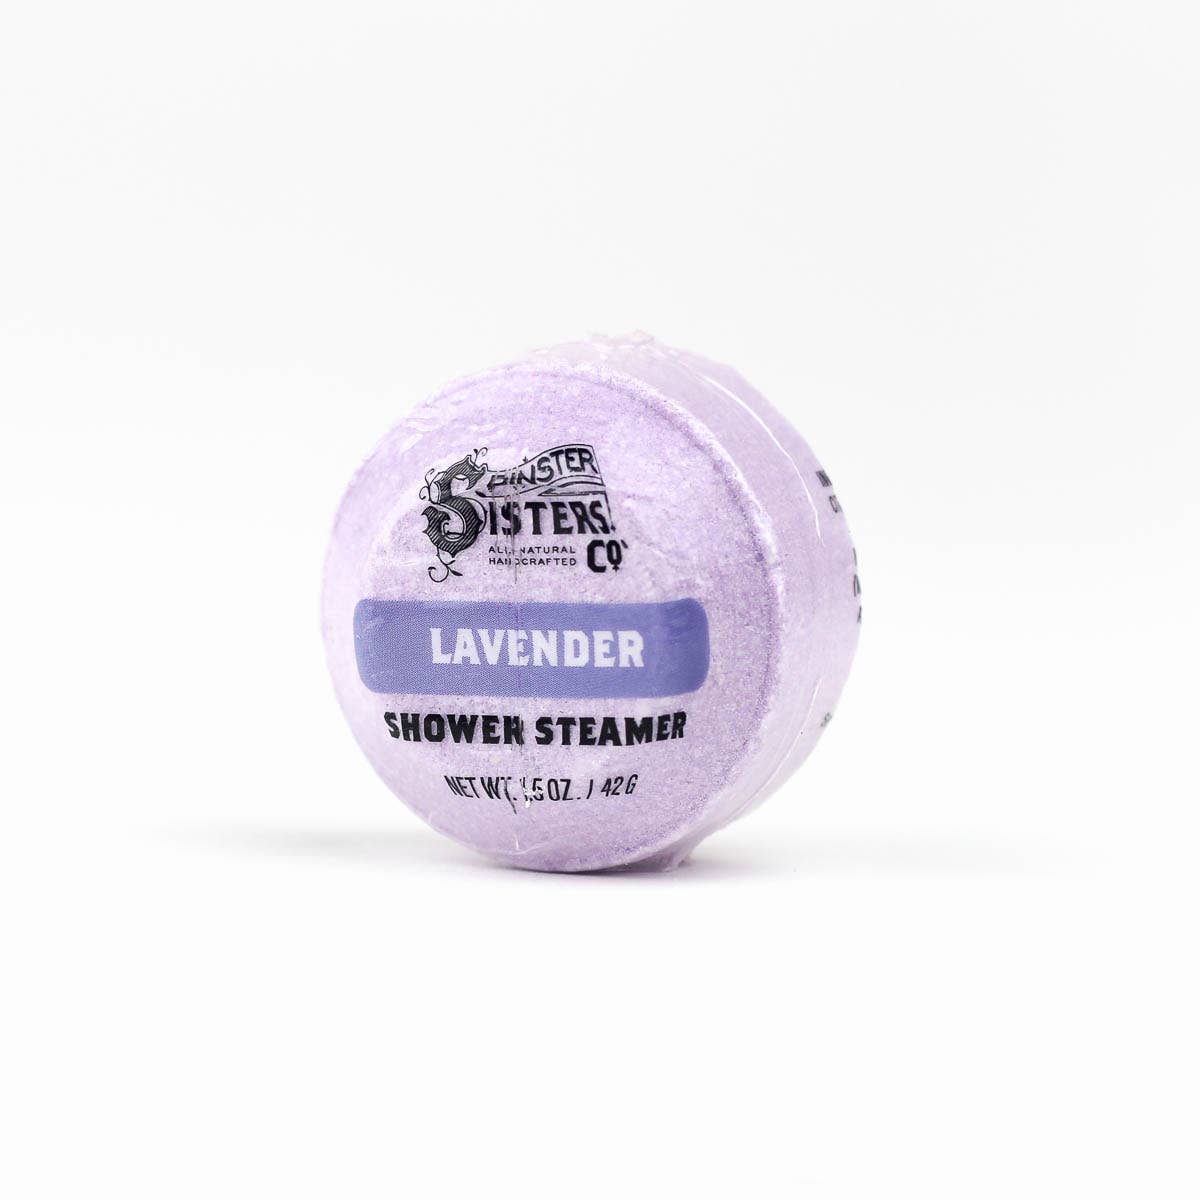 Spinster Sisters Co. - Shower Steamer - Lavender--Lemons and Limes Boutique